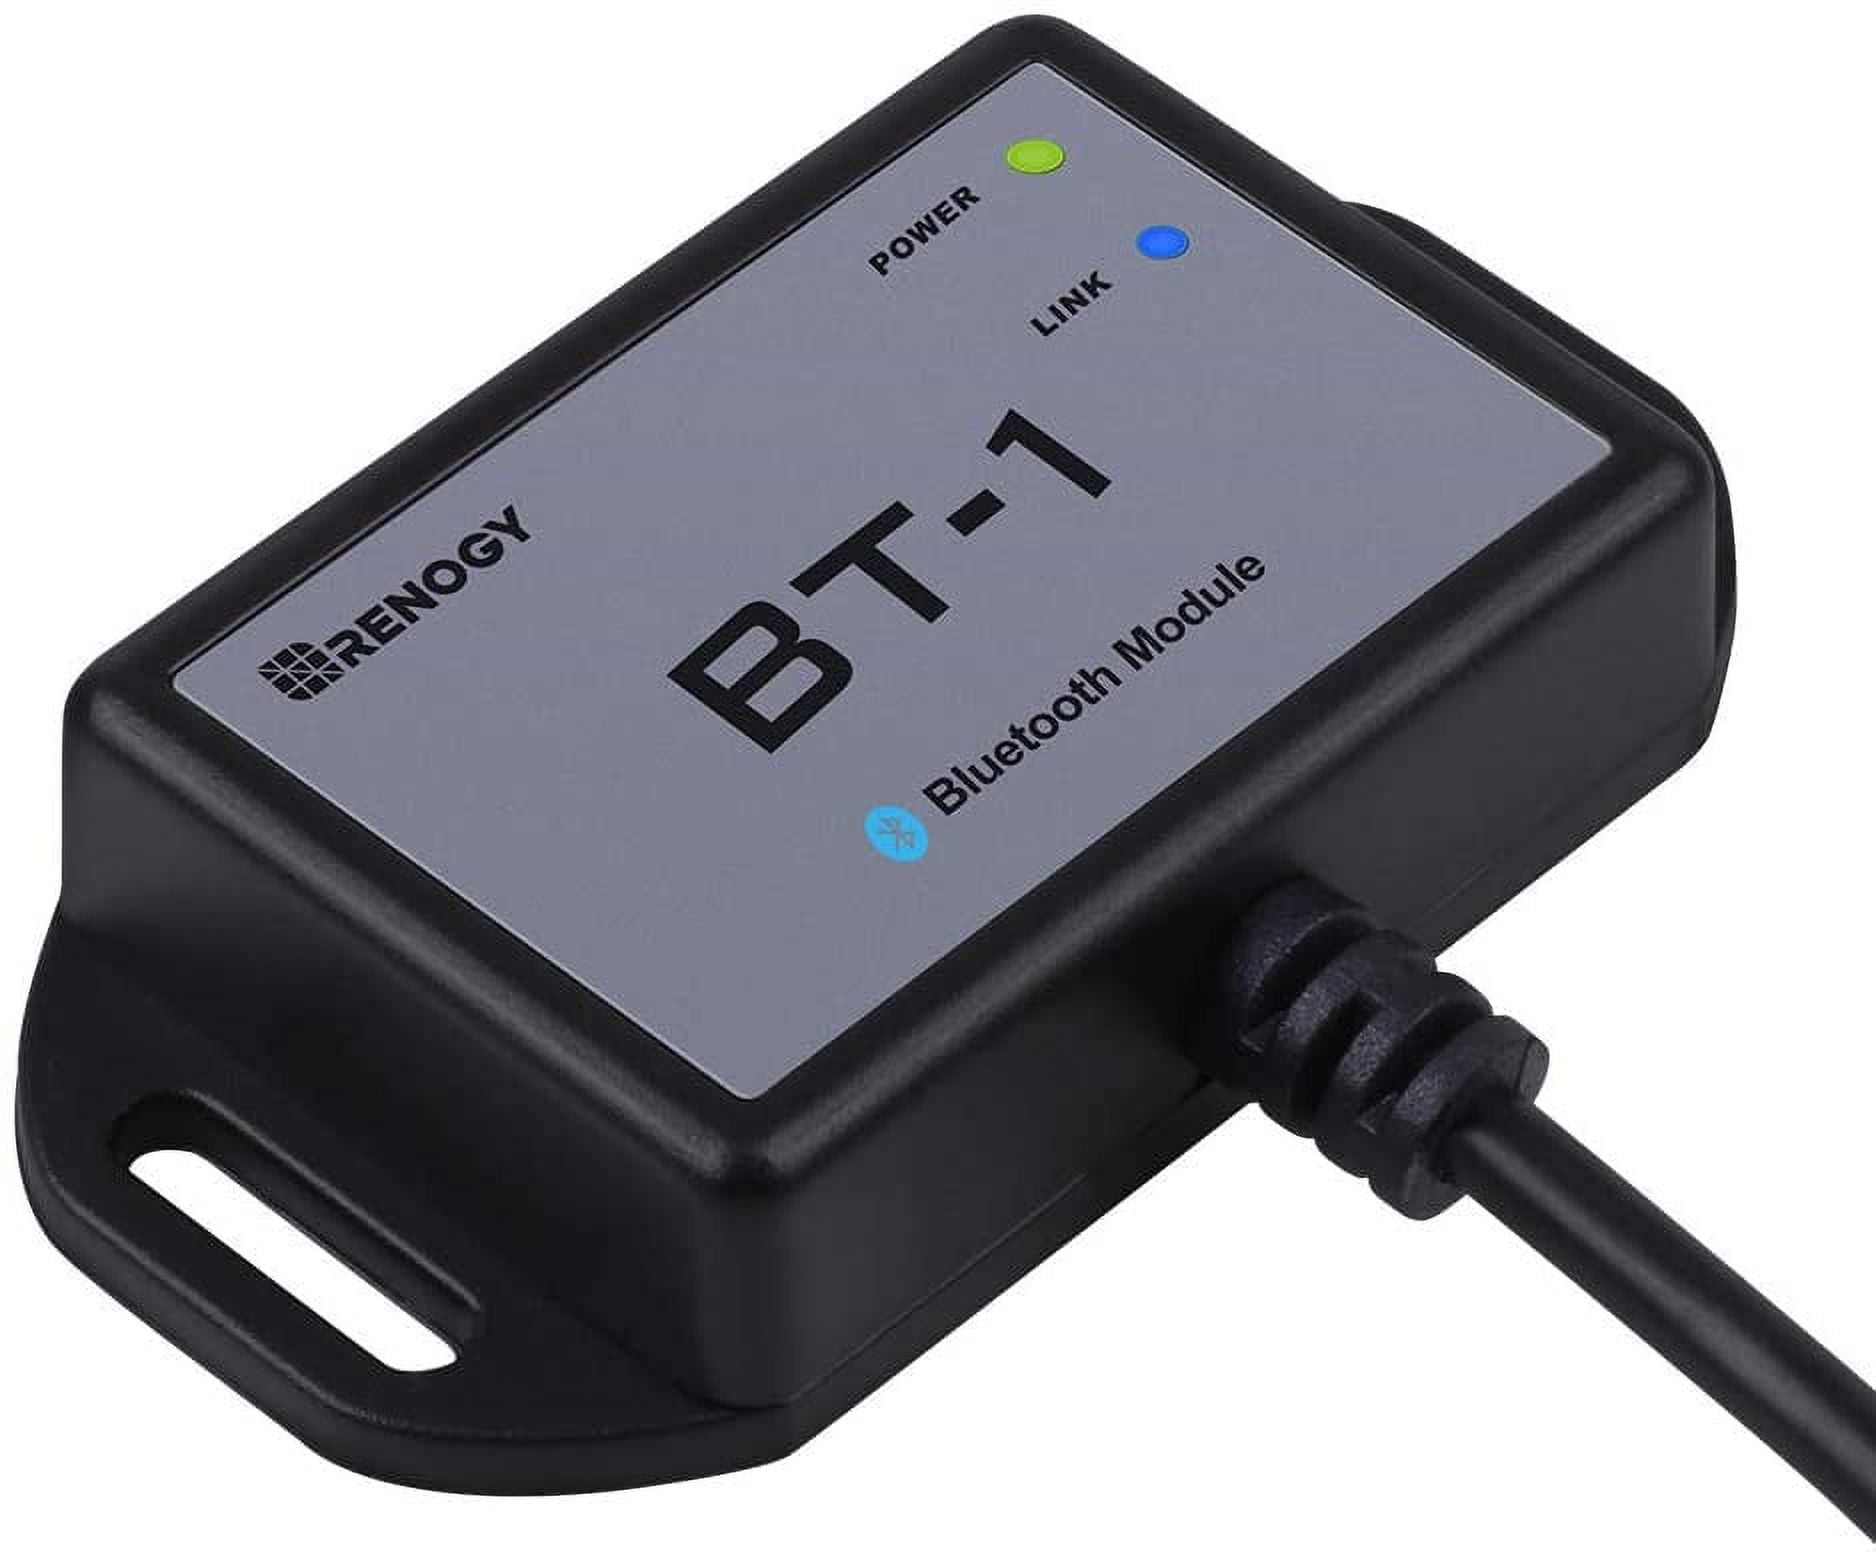 BT800 Series Bluetooth Module